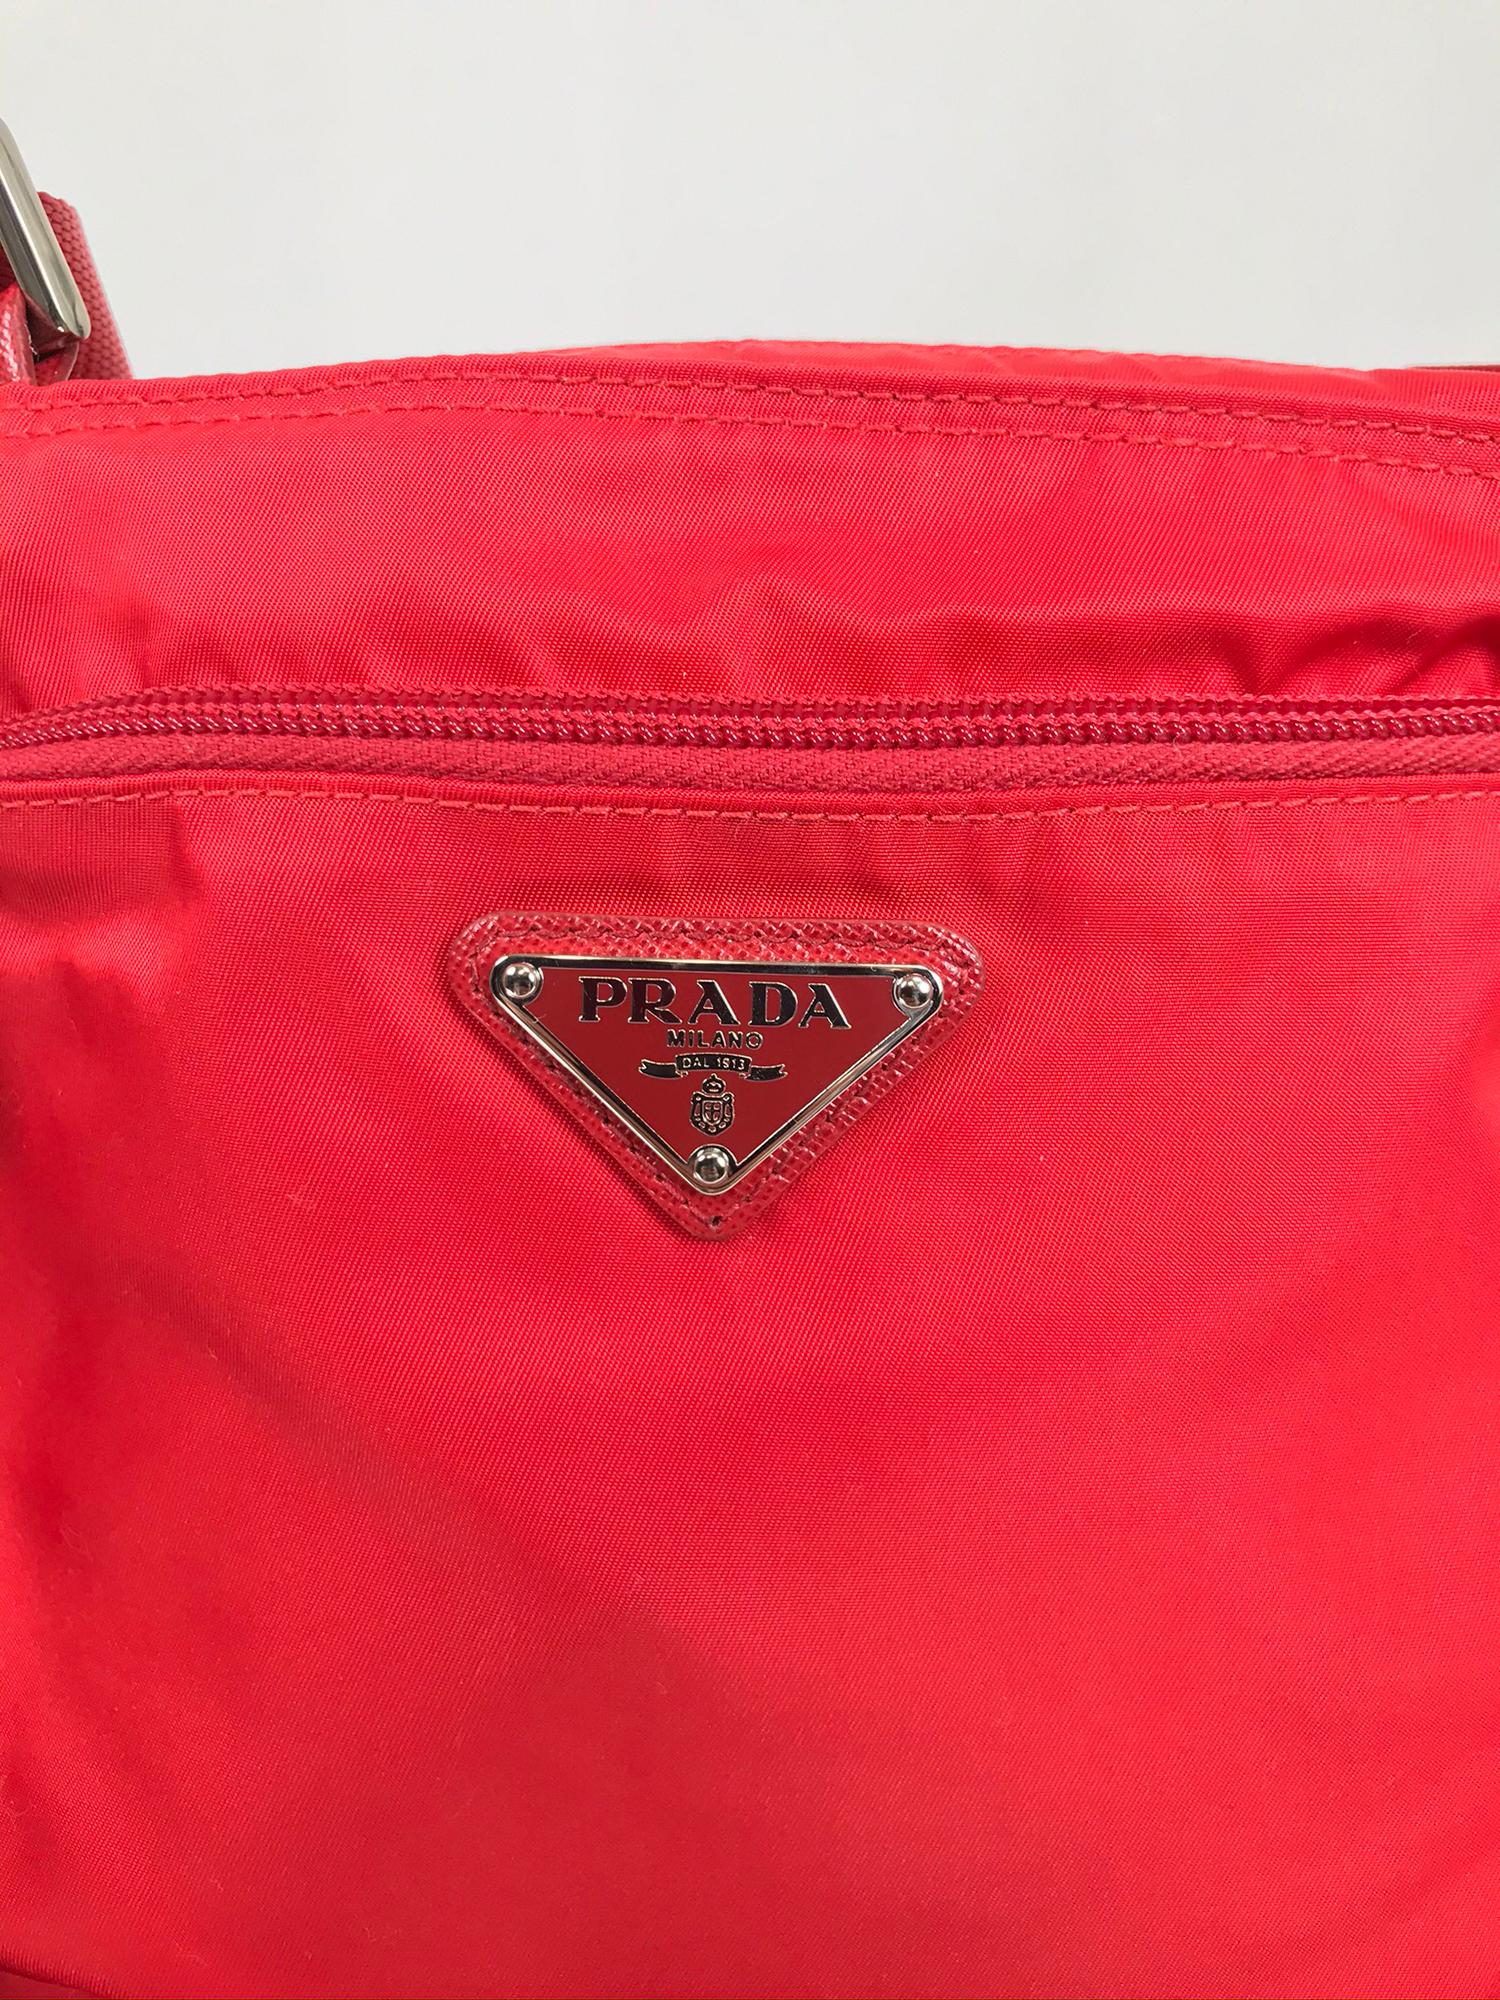 red prada crossbody bag